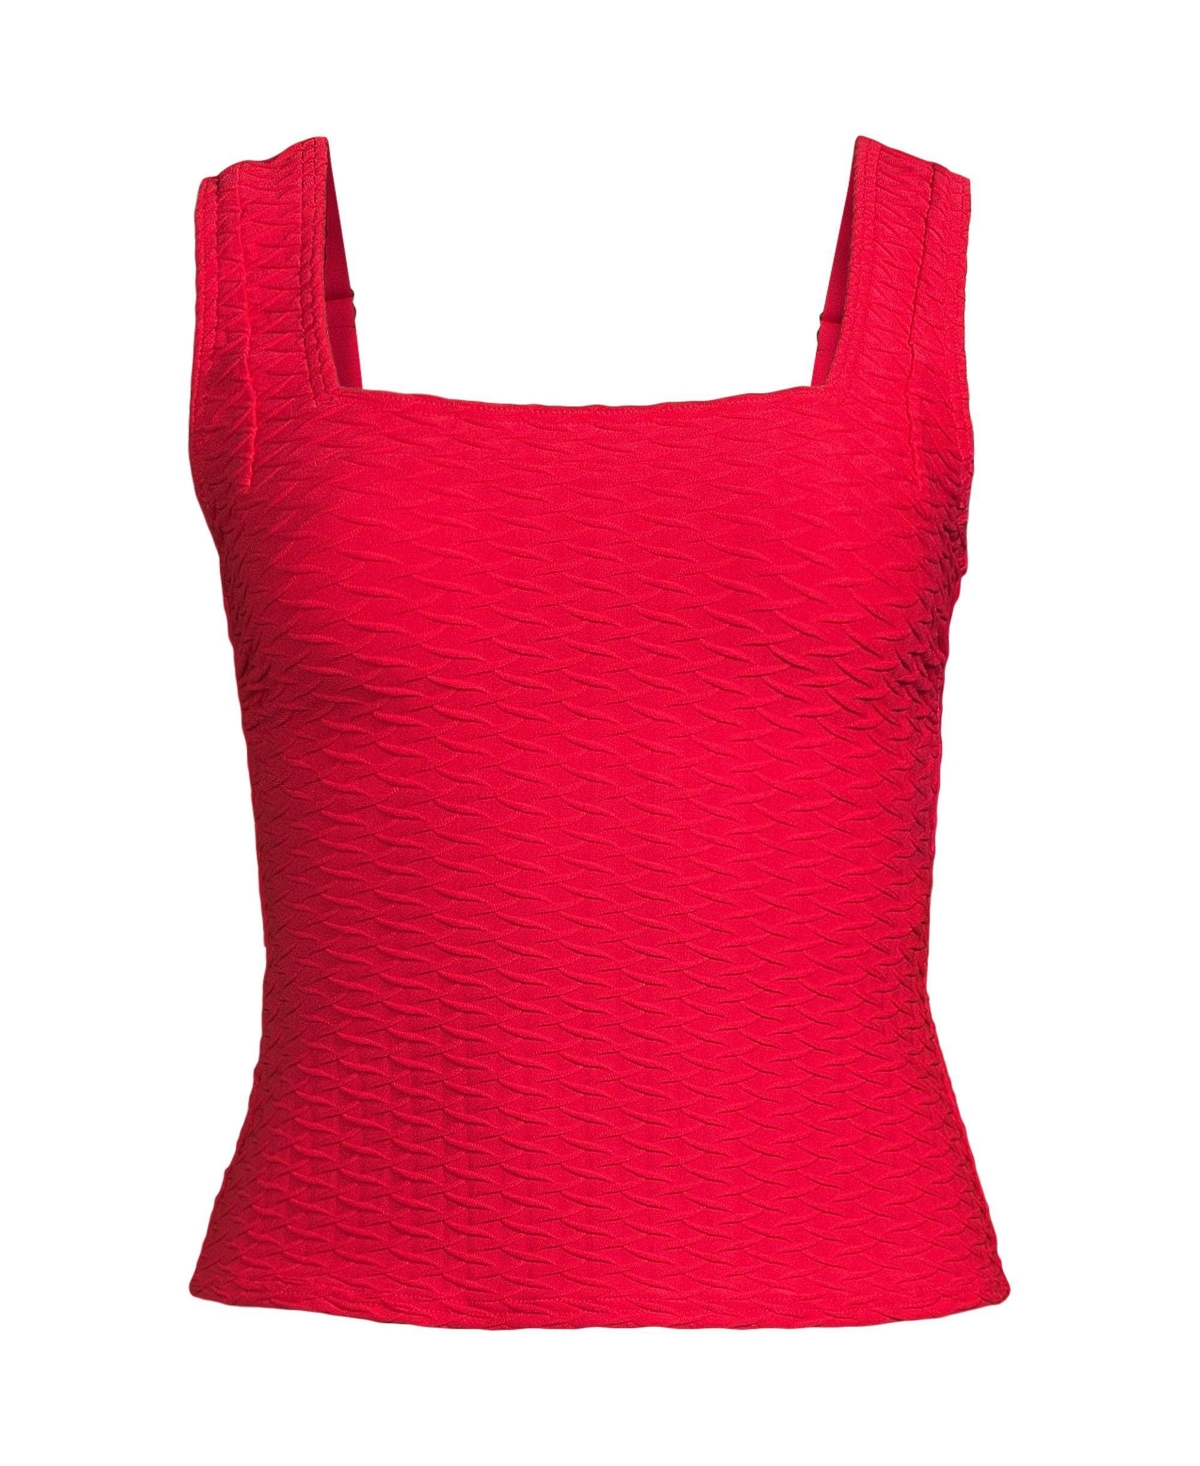 Women's Texture Square Neck Tankini Swimsuit Top - Strawberry